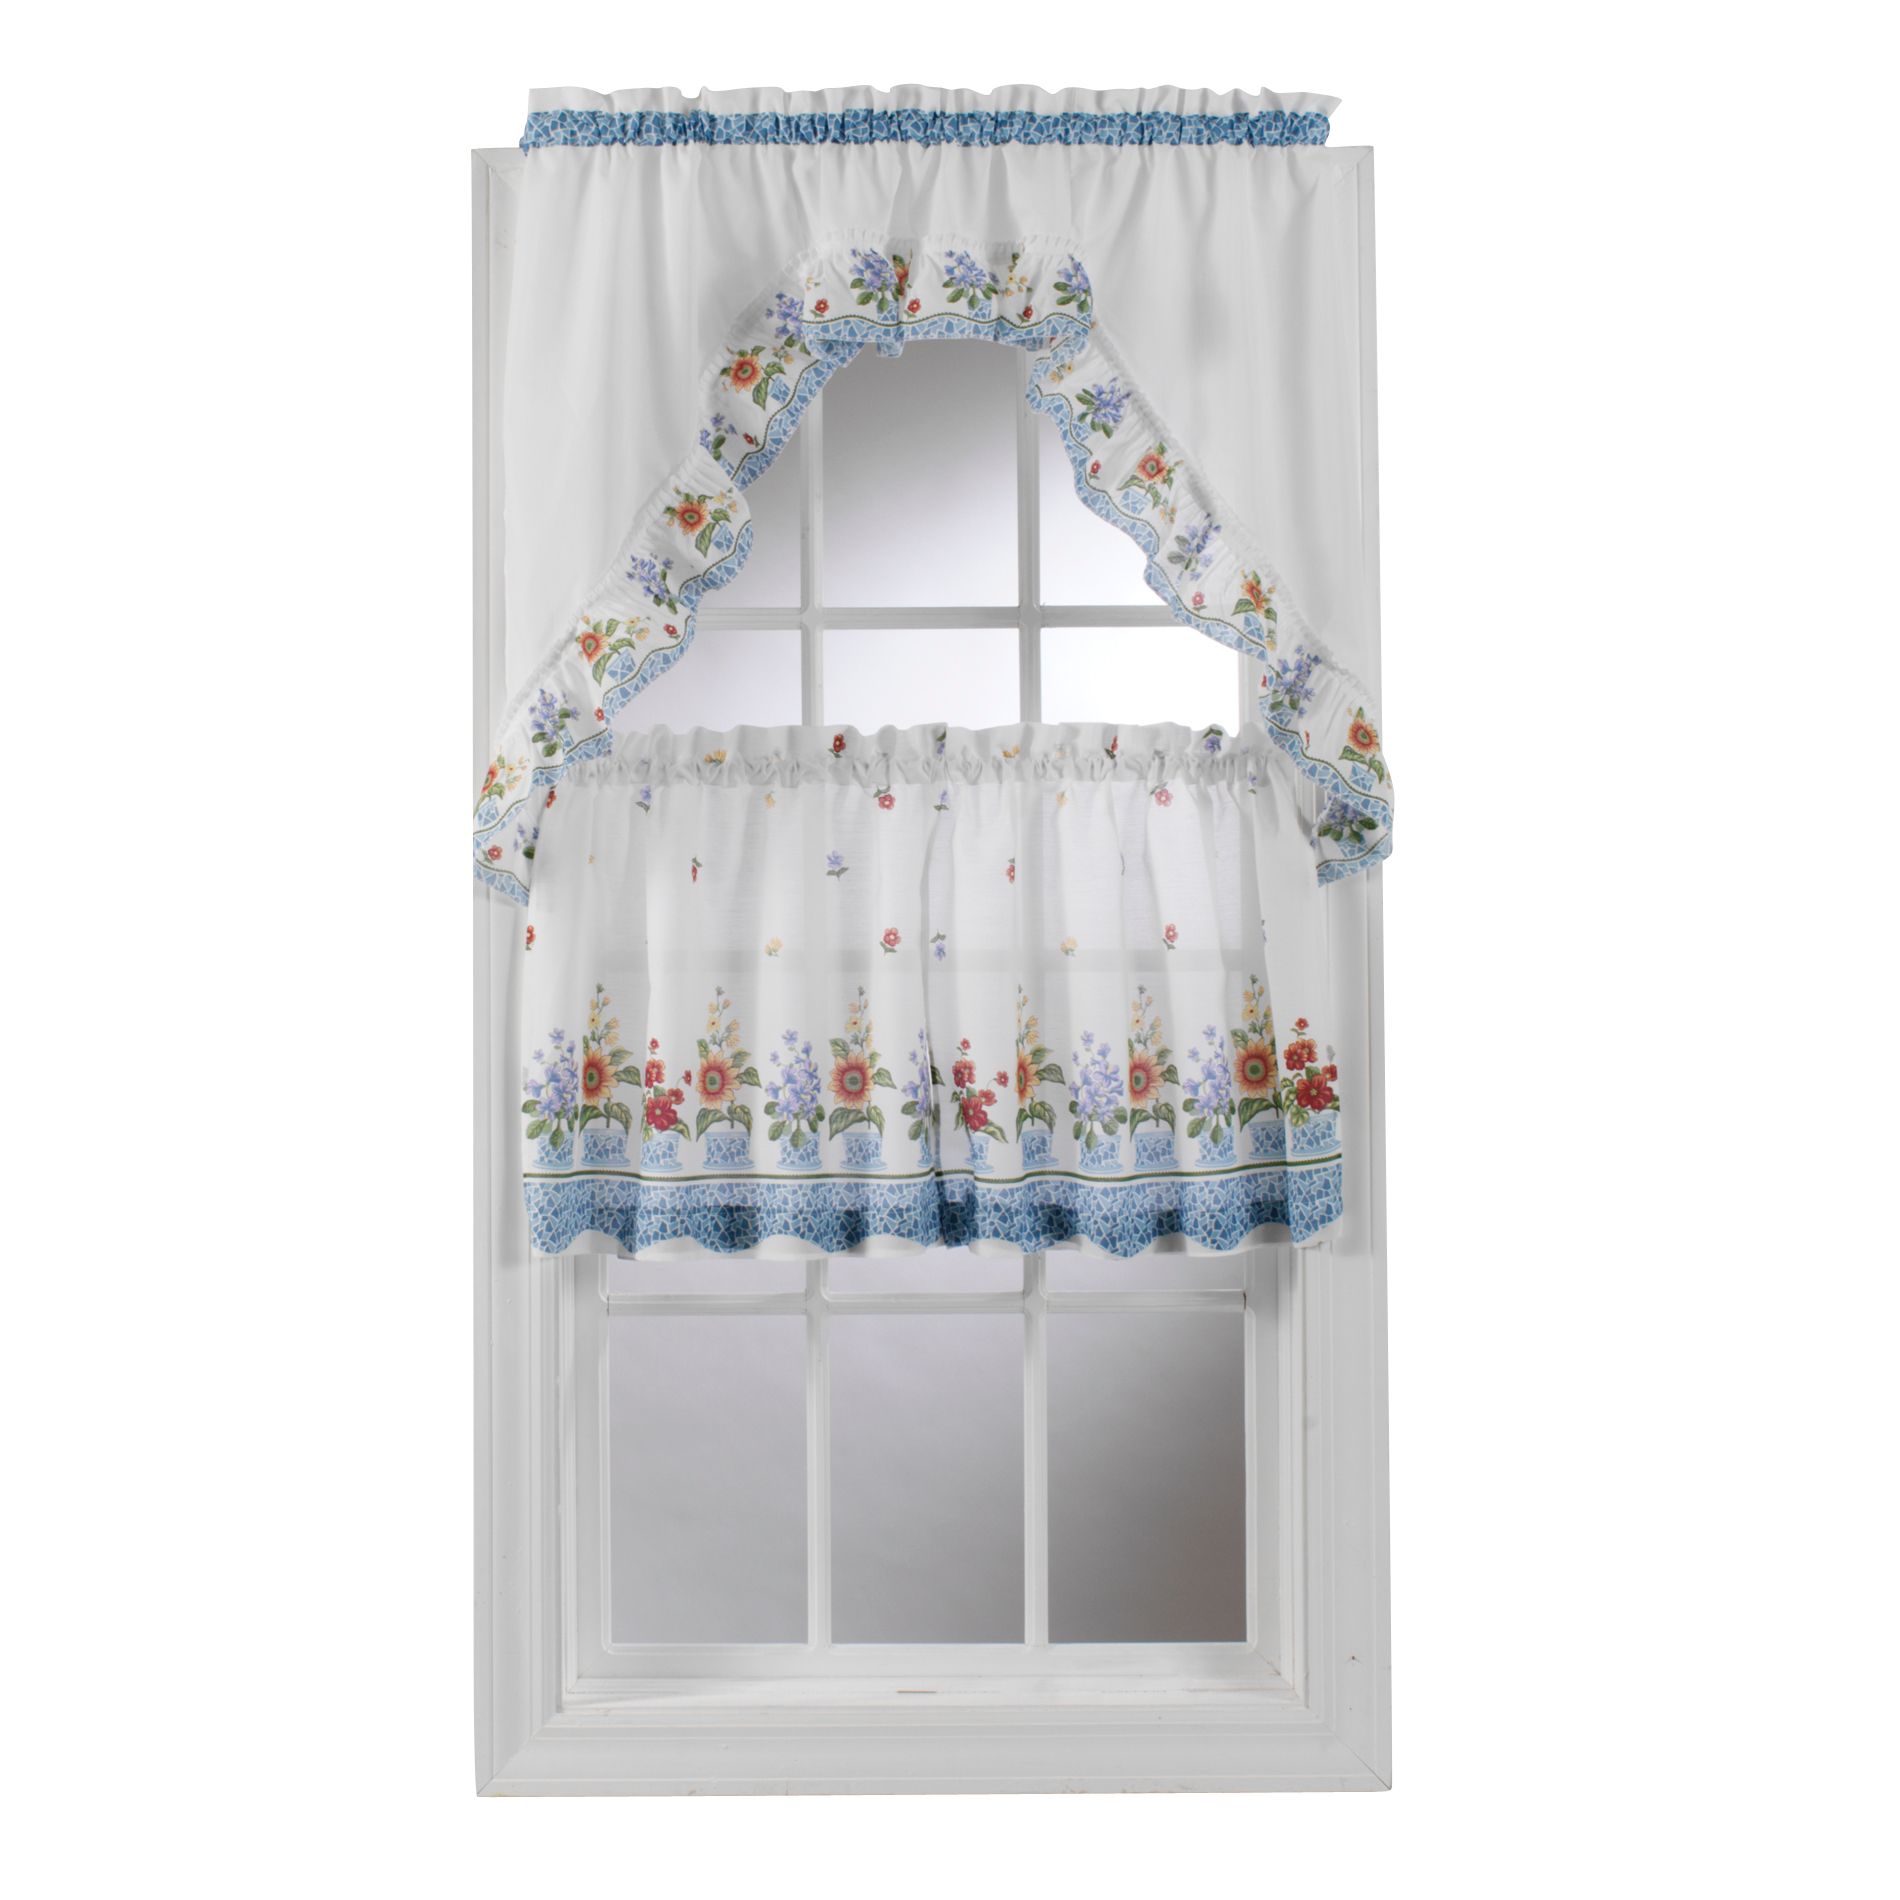 Essential Home Blue Mosaic Pots Window Tier Set